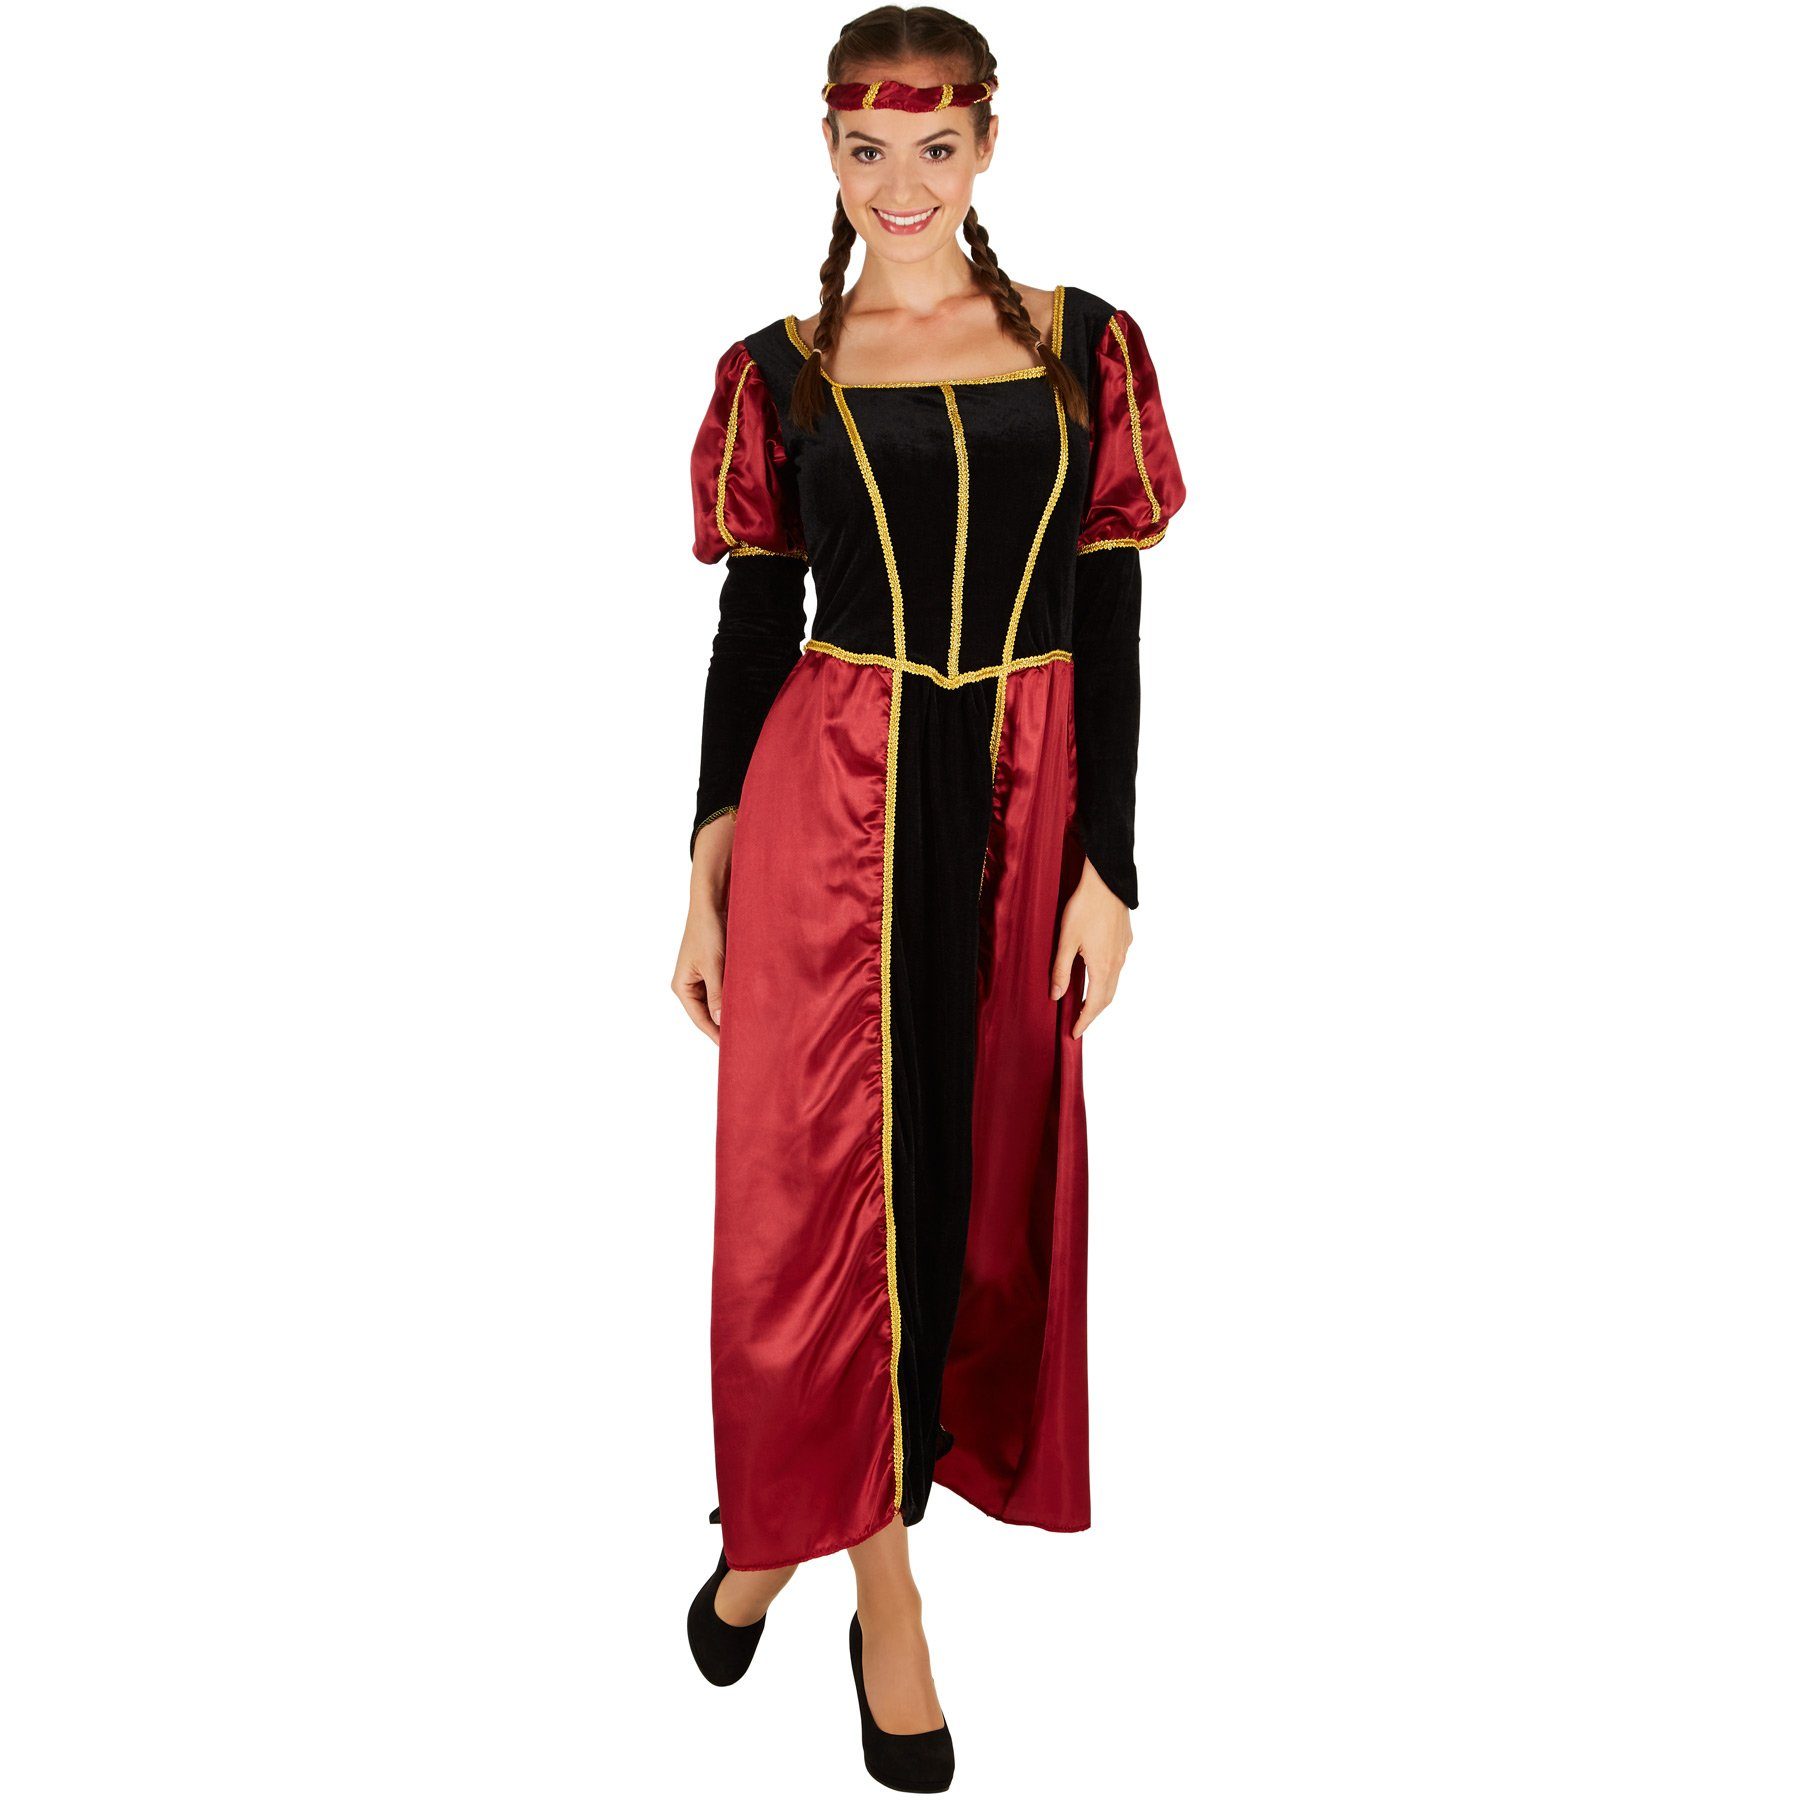 dressforfun Kostüm Frauenkostüm Burgdame